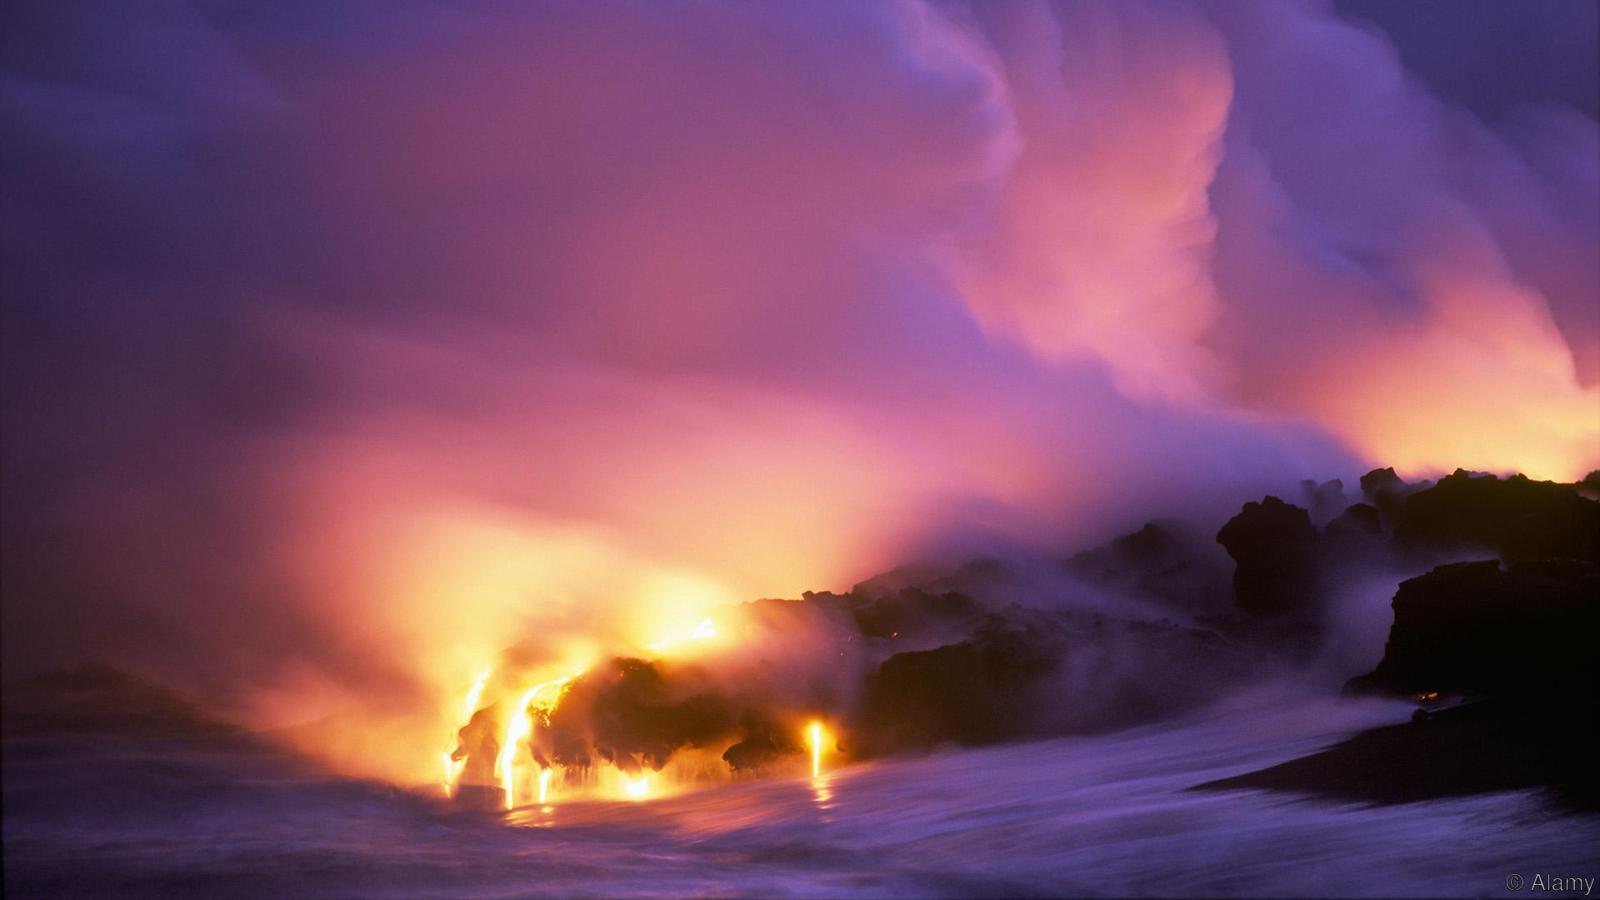 Kilauea Flowing into the Sea Hawaii Volcanoes National Park Big Island of Hawaii. Image shot 2000. Exact date unknown.